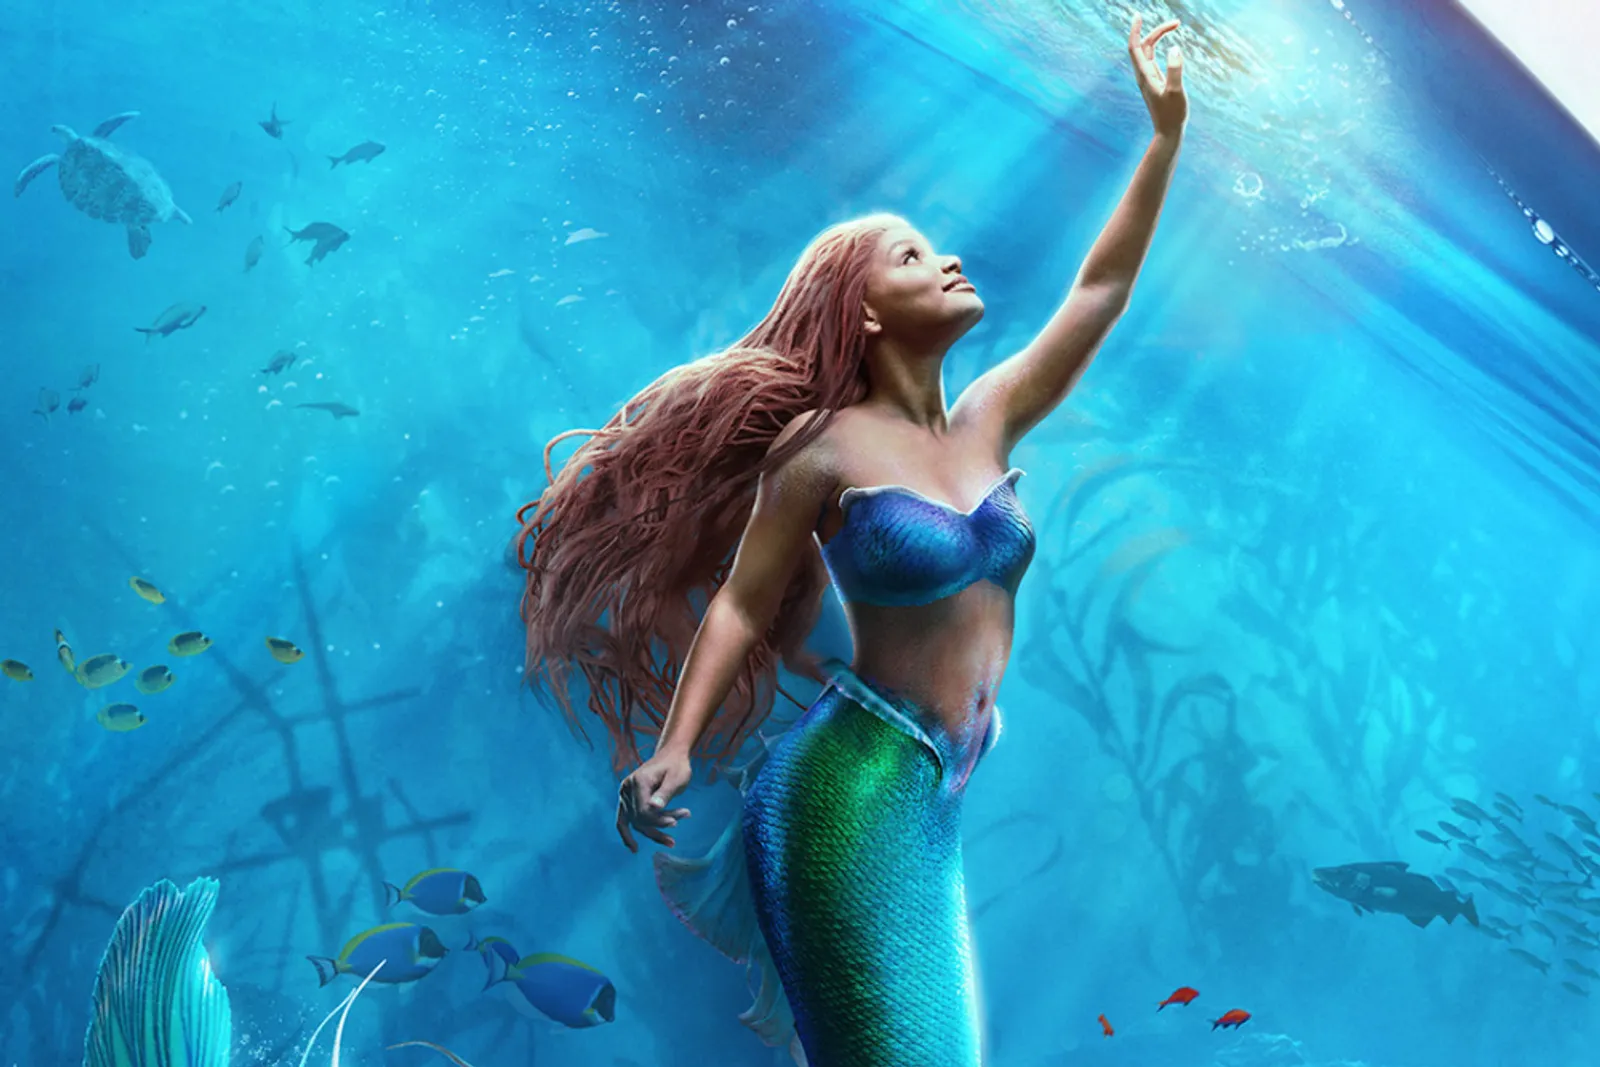 Lirik "Part of Your World" - OST Disney's The Little Mermaid